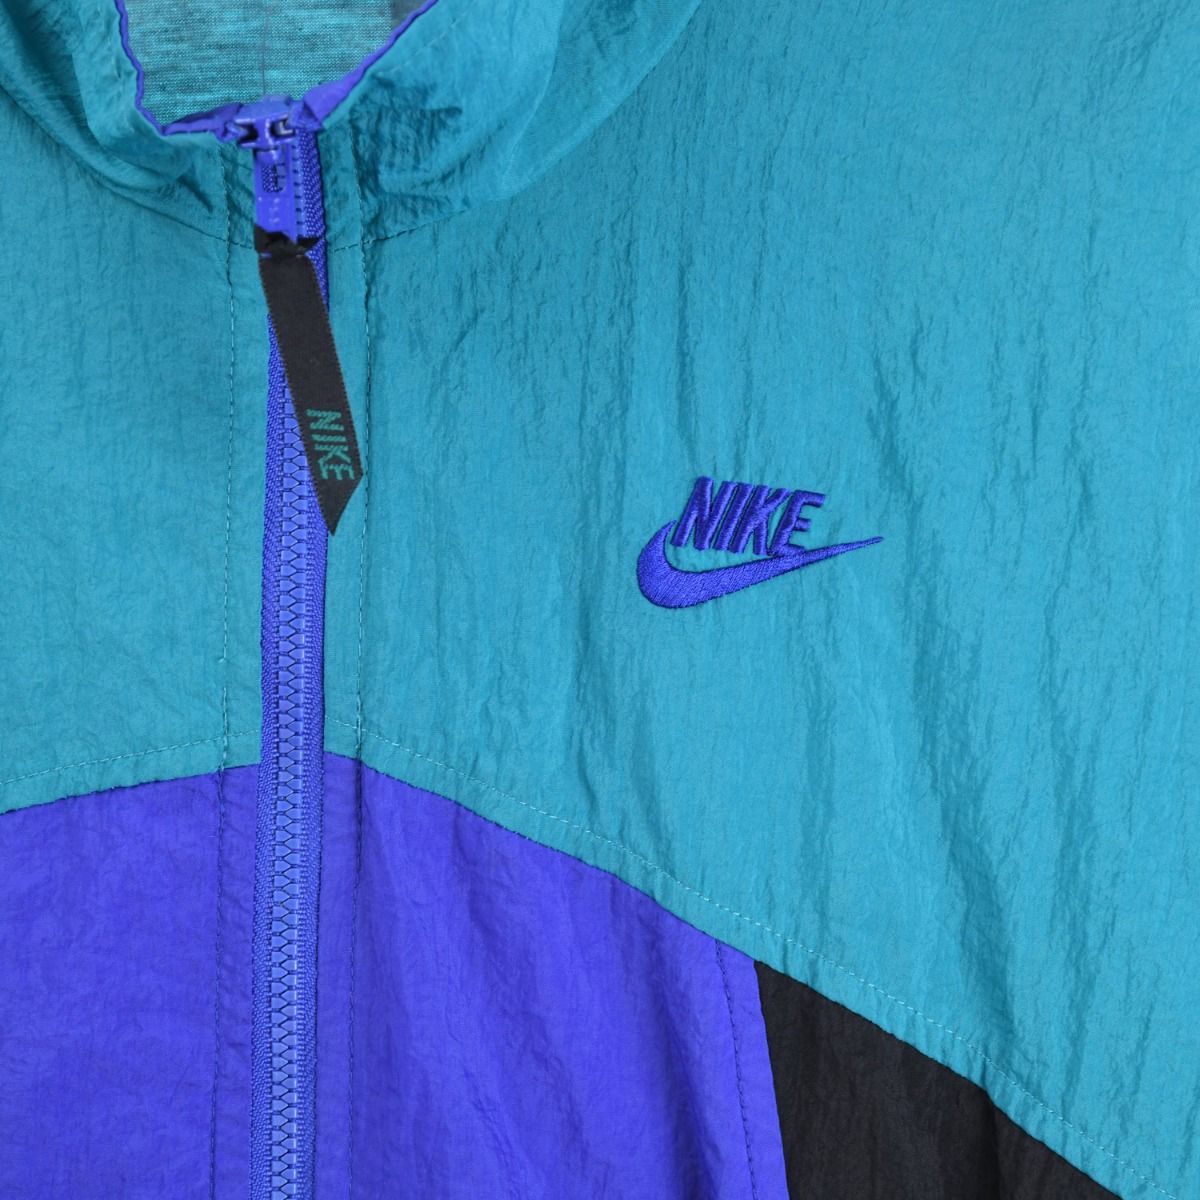 Nike Early 1990s Track Jacket